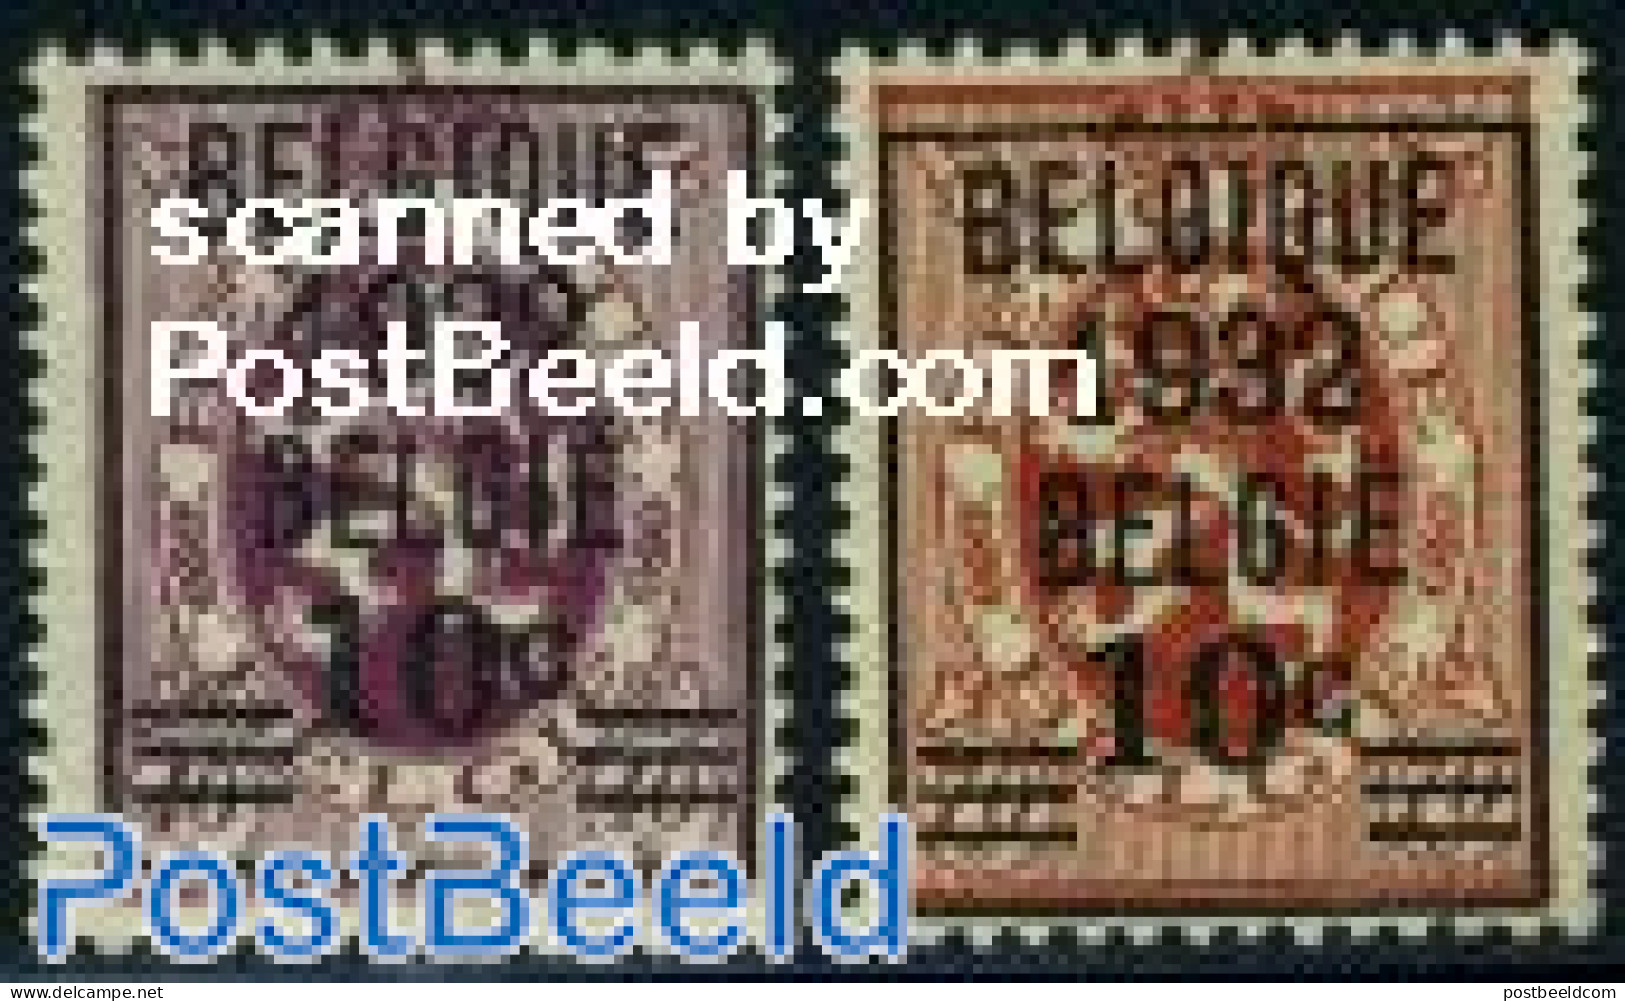 Belgium 1932 Overprints 2v, Mint NH - Neufs